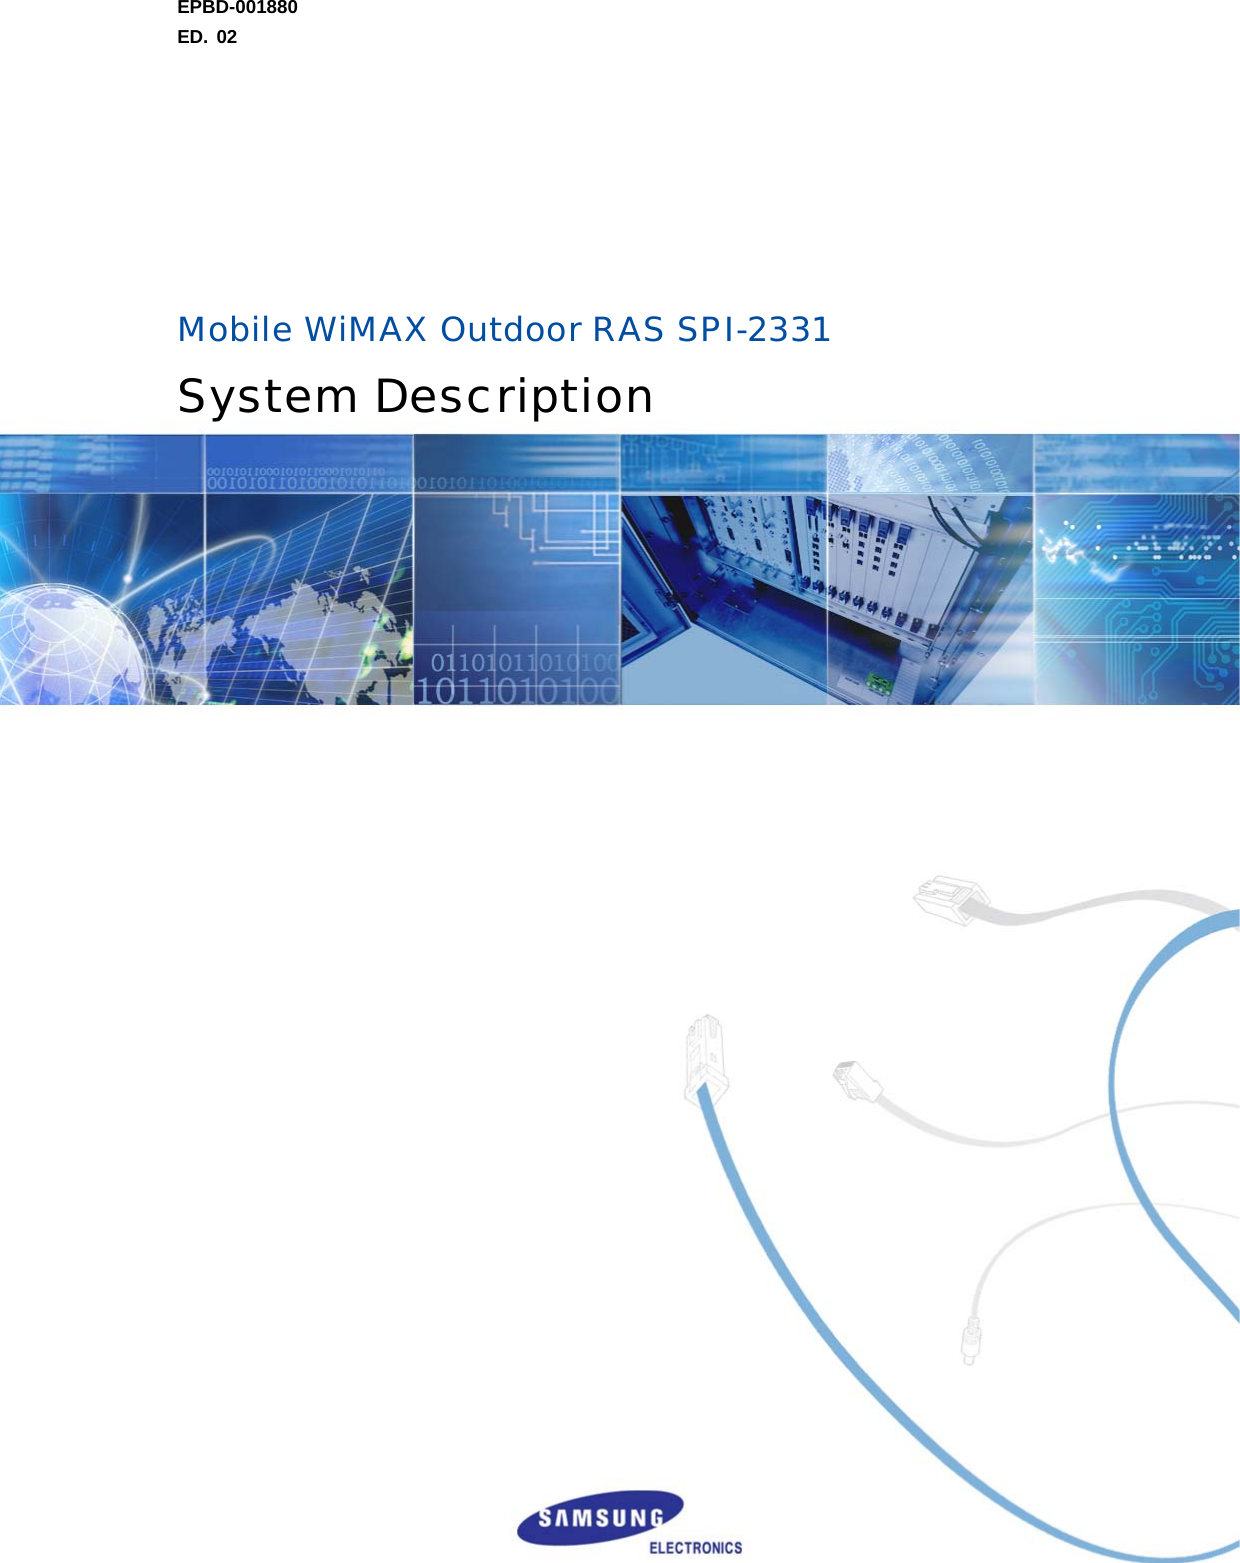 EPBD-001880 ED. 02          Mobile WiMAX Outdoor RAS SPI-2331 System Description    